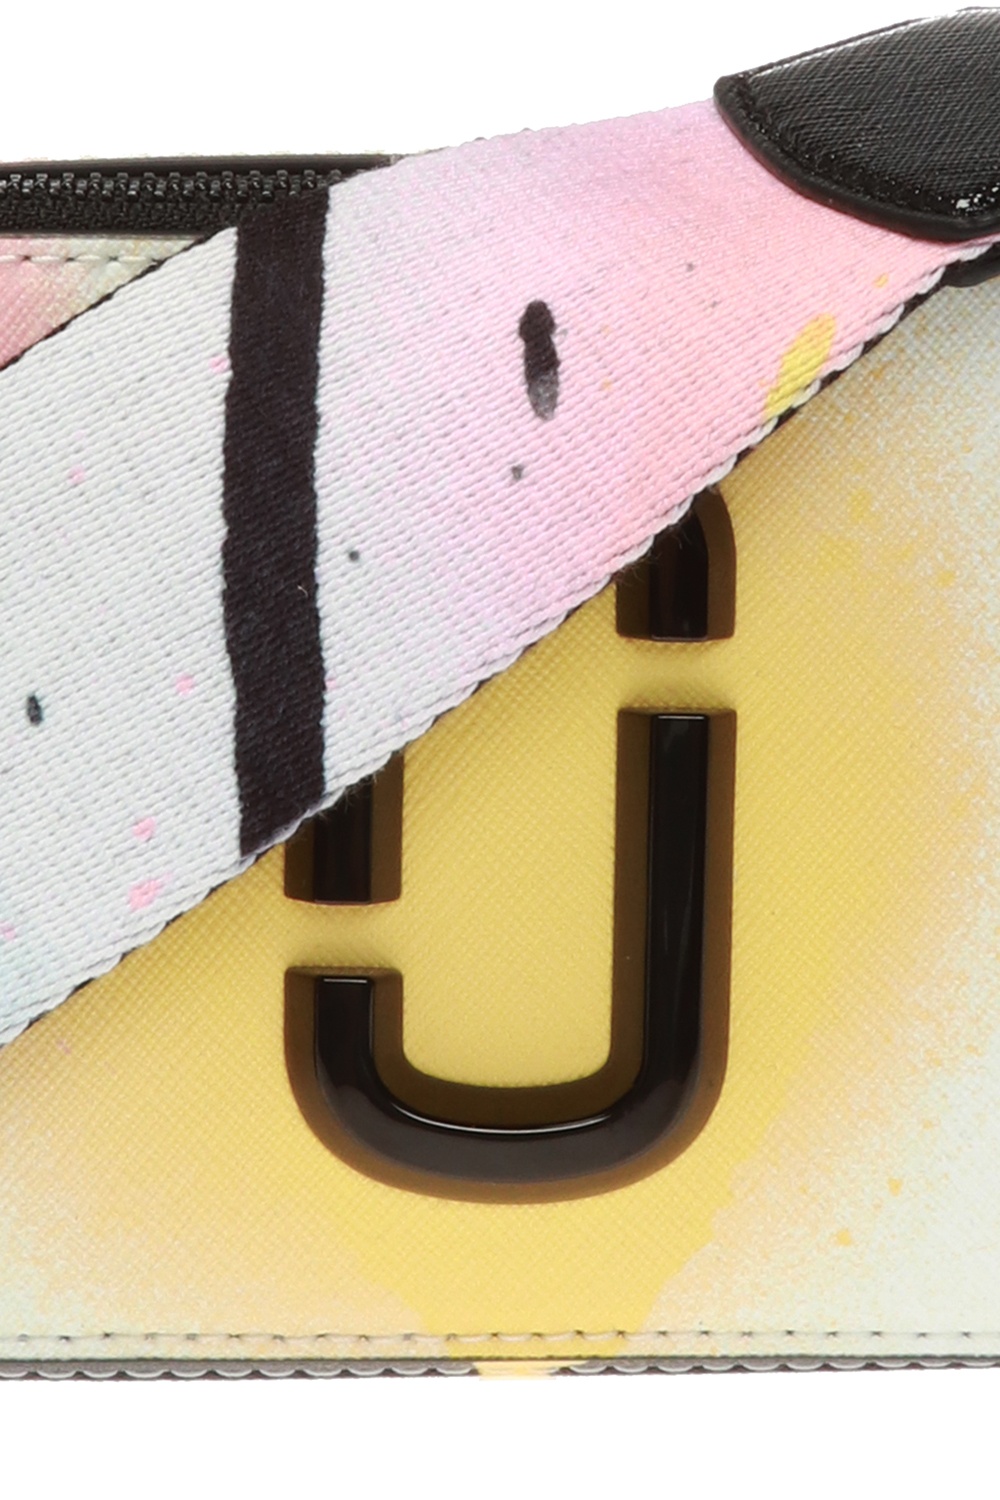 Marc Jacobs ‘The Snapshot Small’ Shoulder Bag Women's Pink | Vitkac